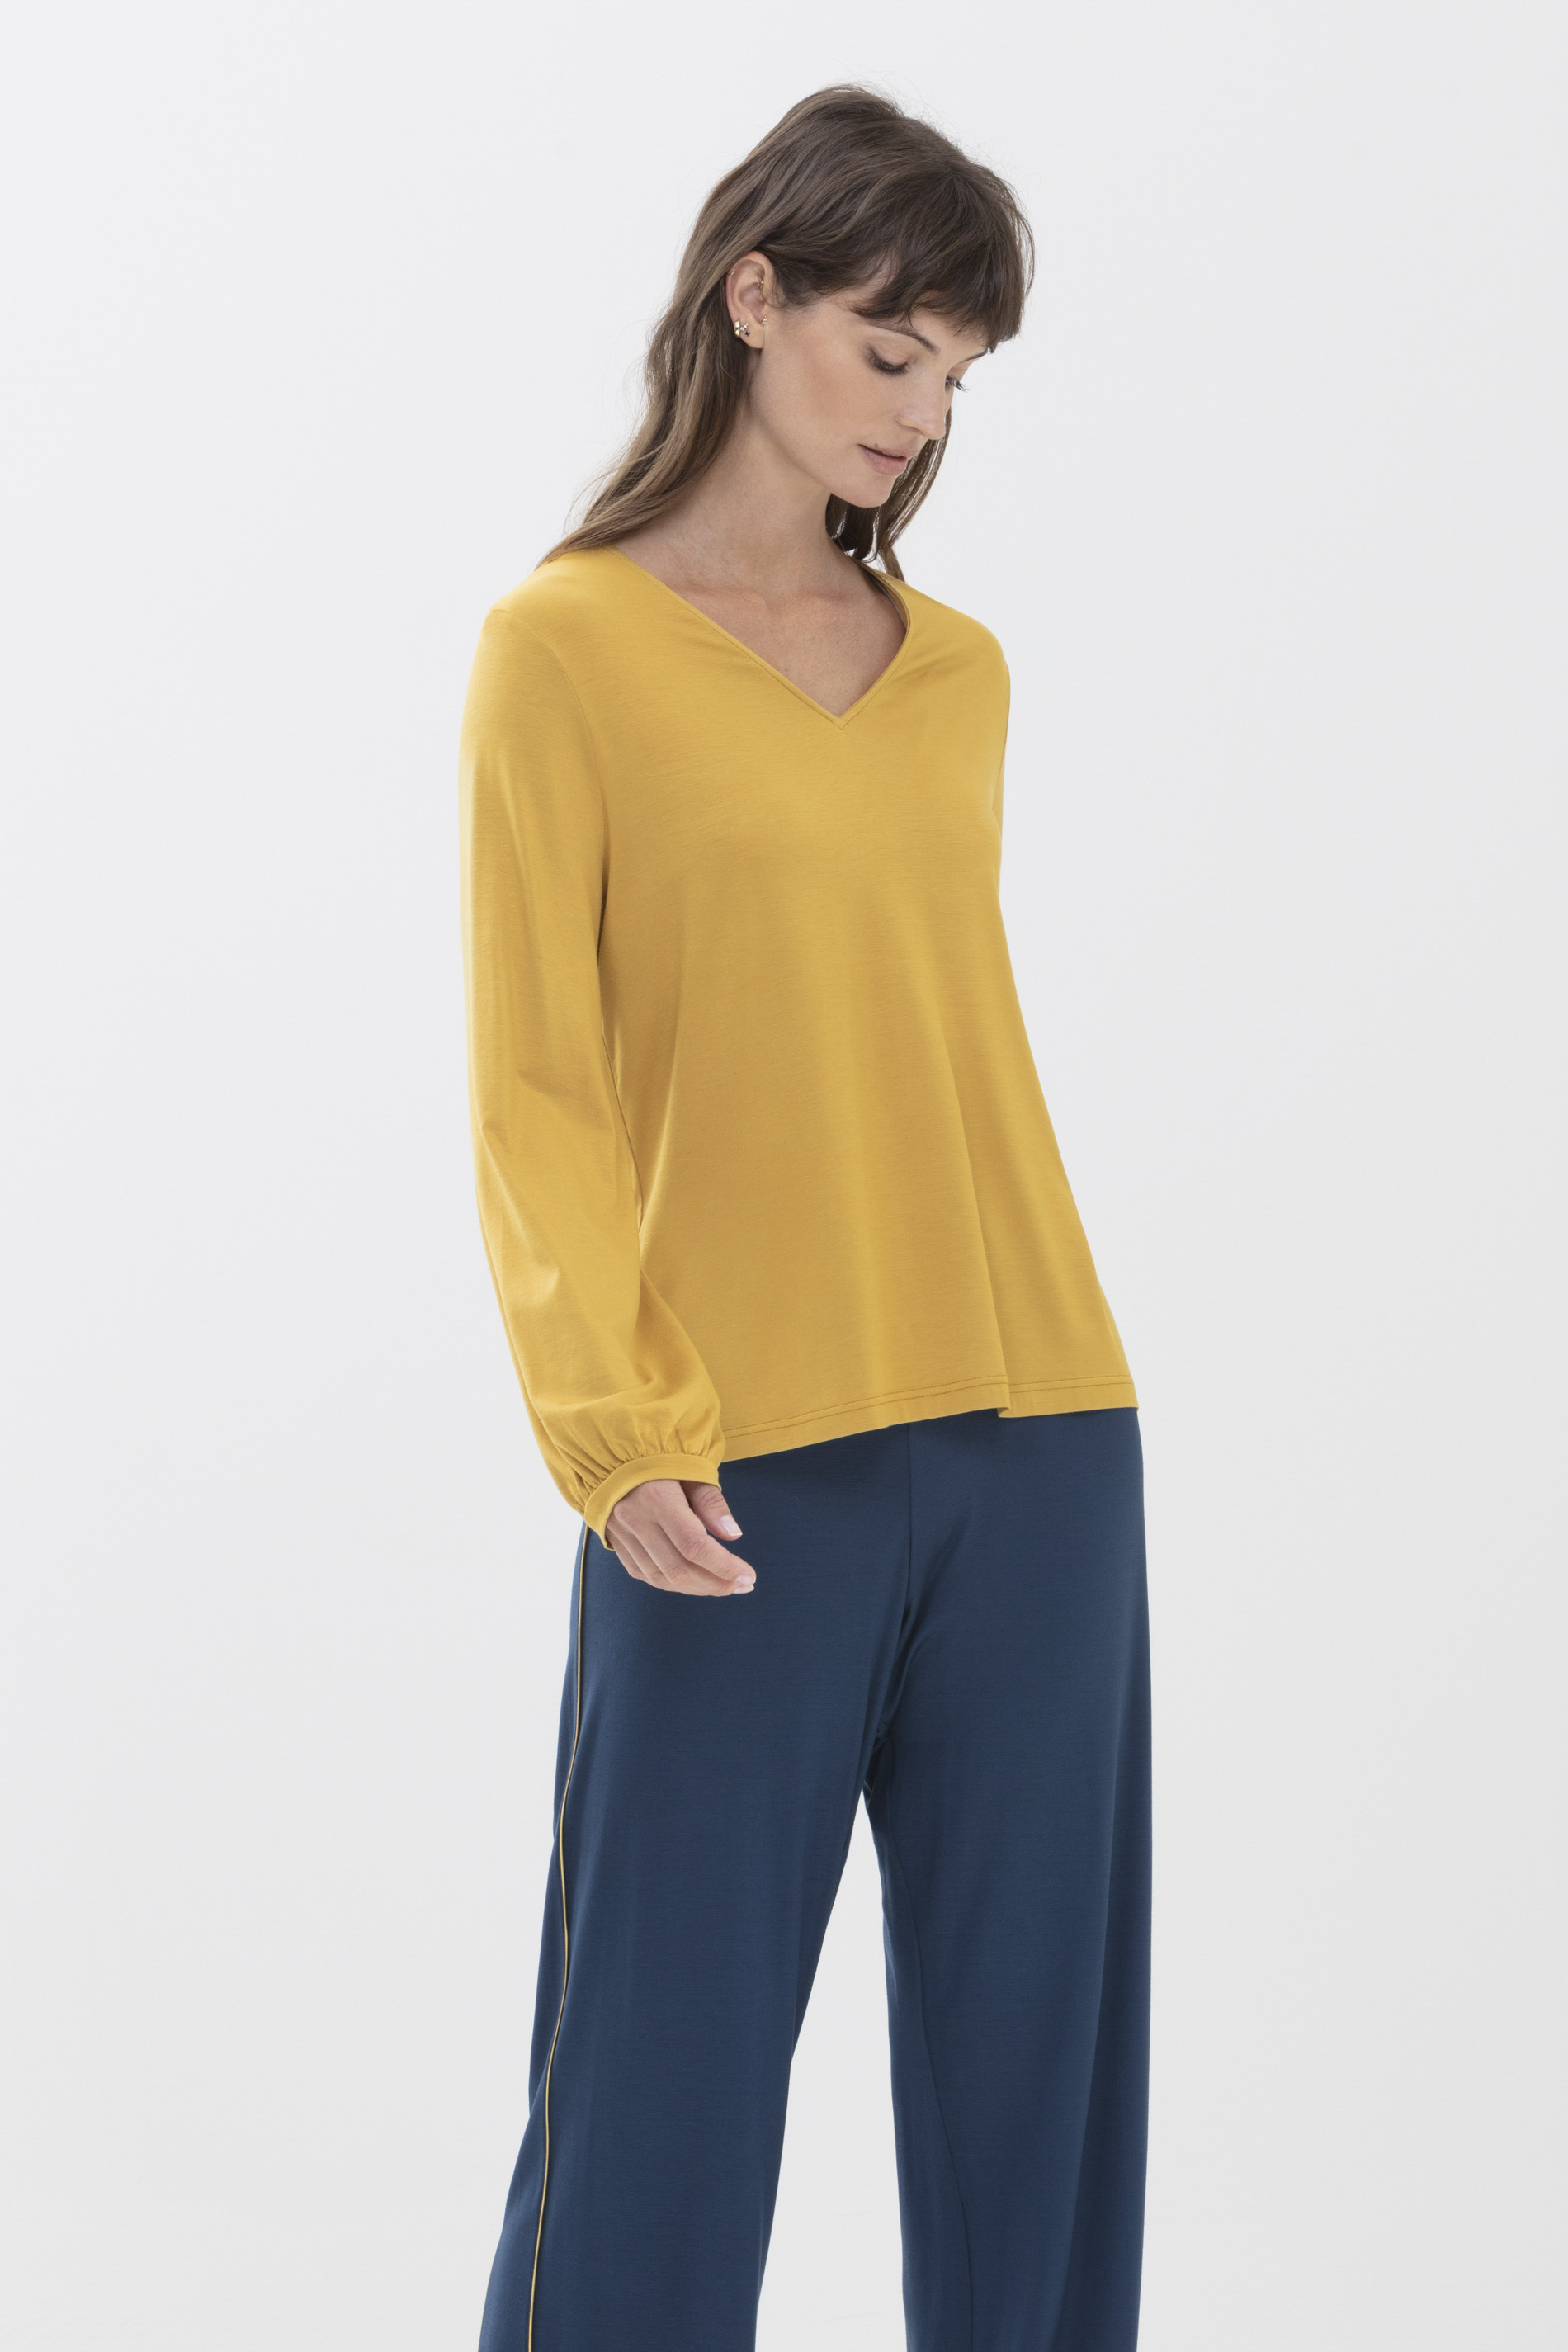 Shirt Wintergold Serie Alena Front View | mey®